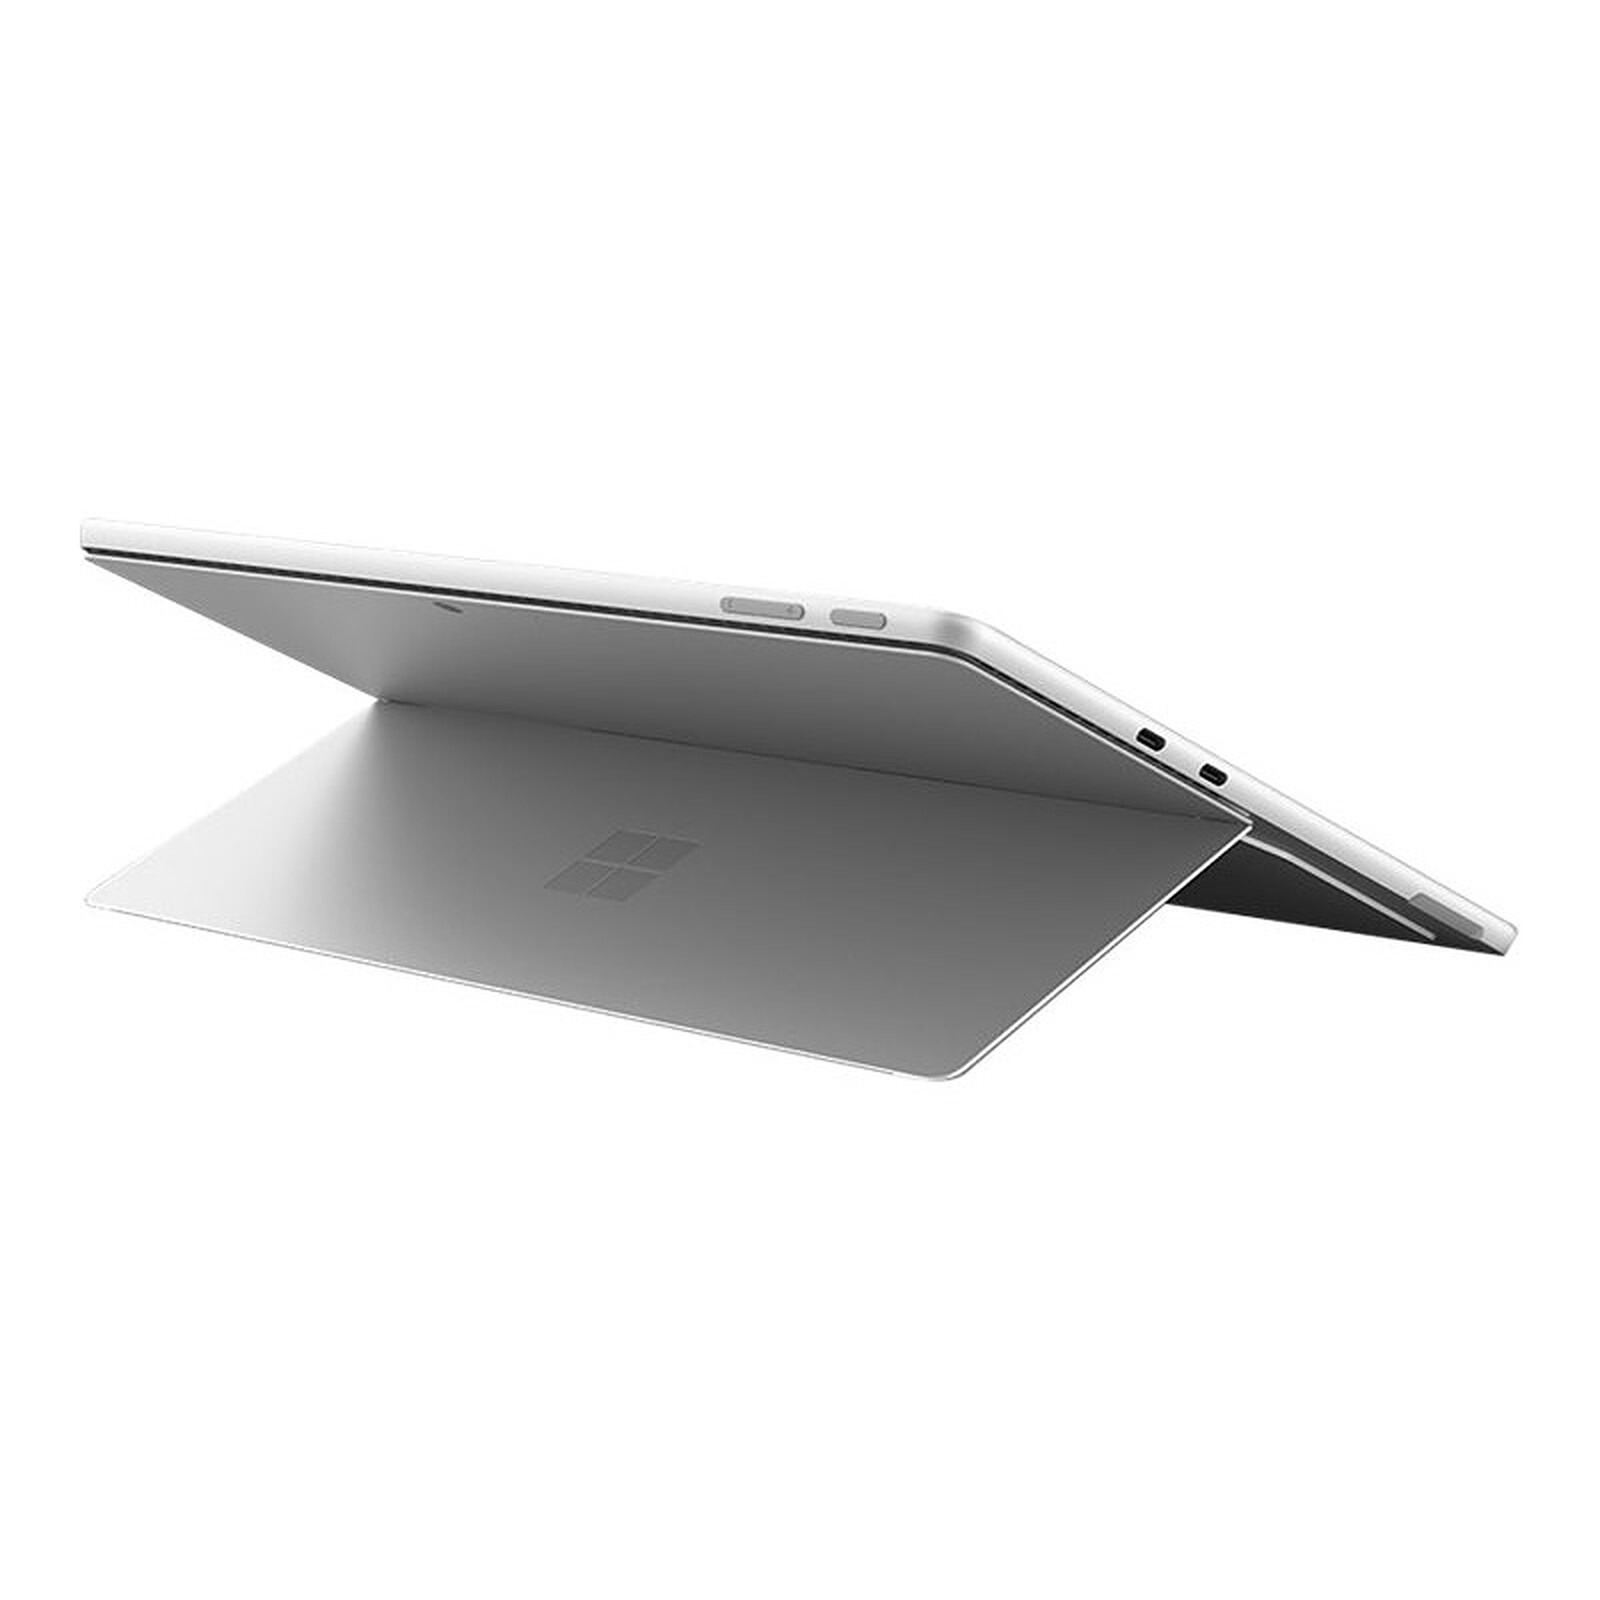 Porte-ordinateur portable de table - LA-911N - Modern Solid